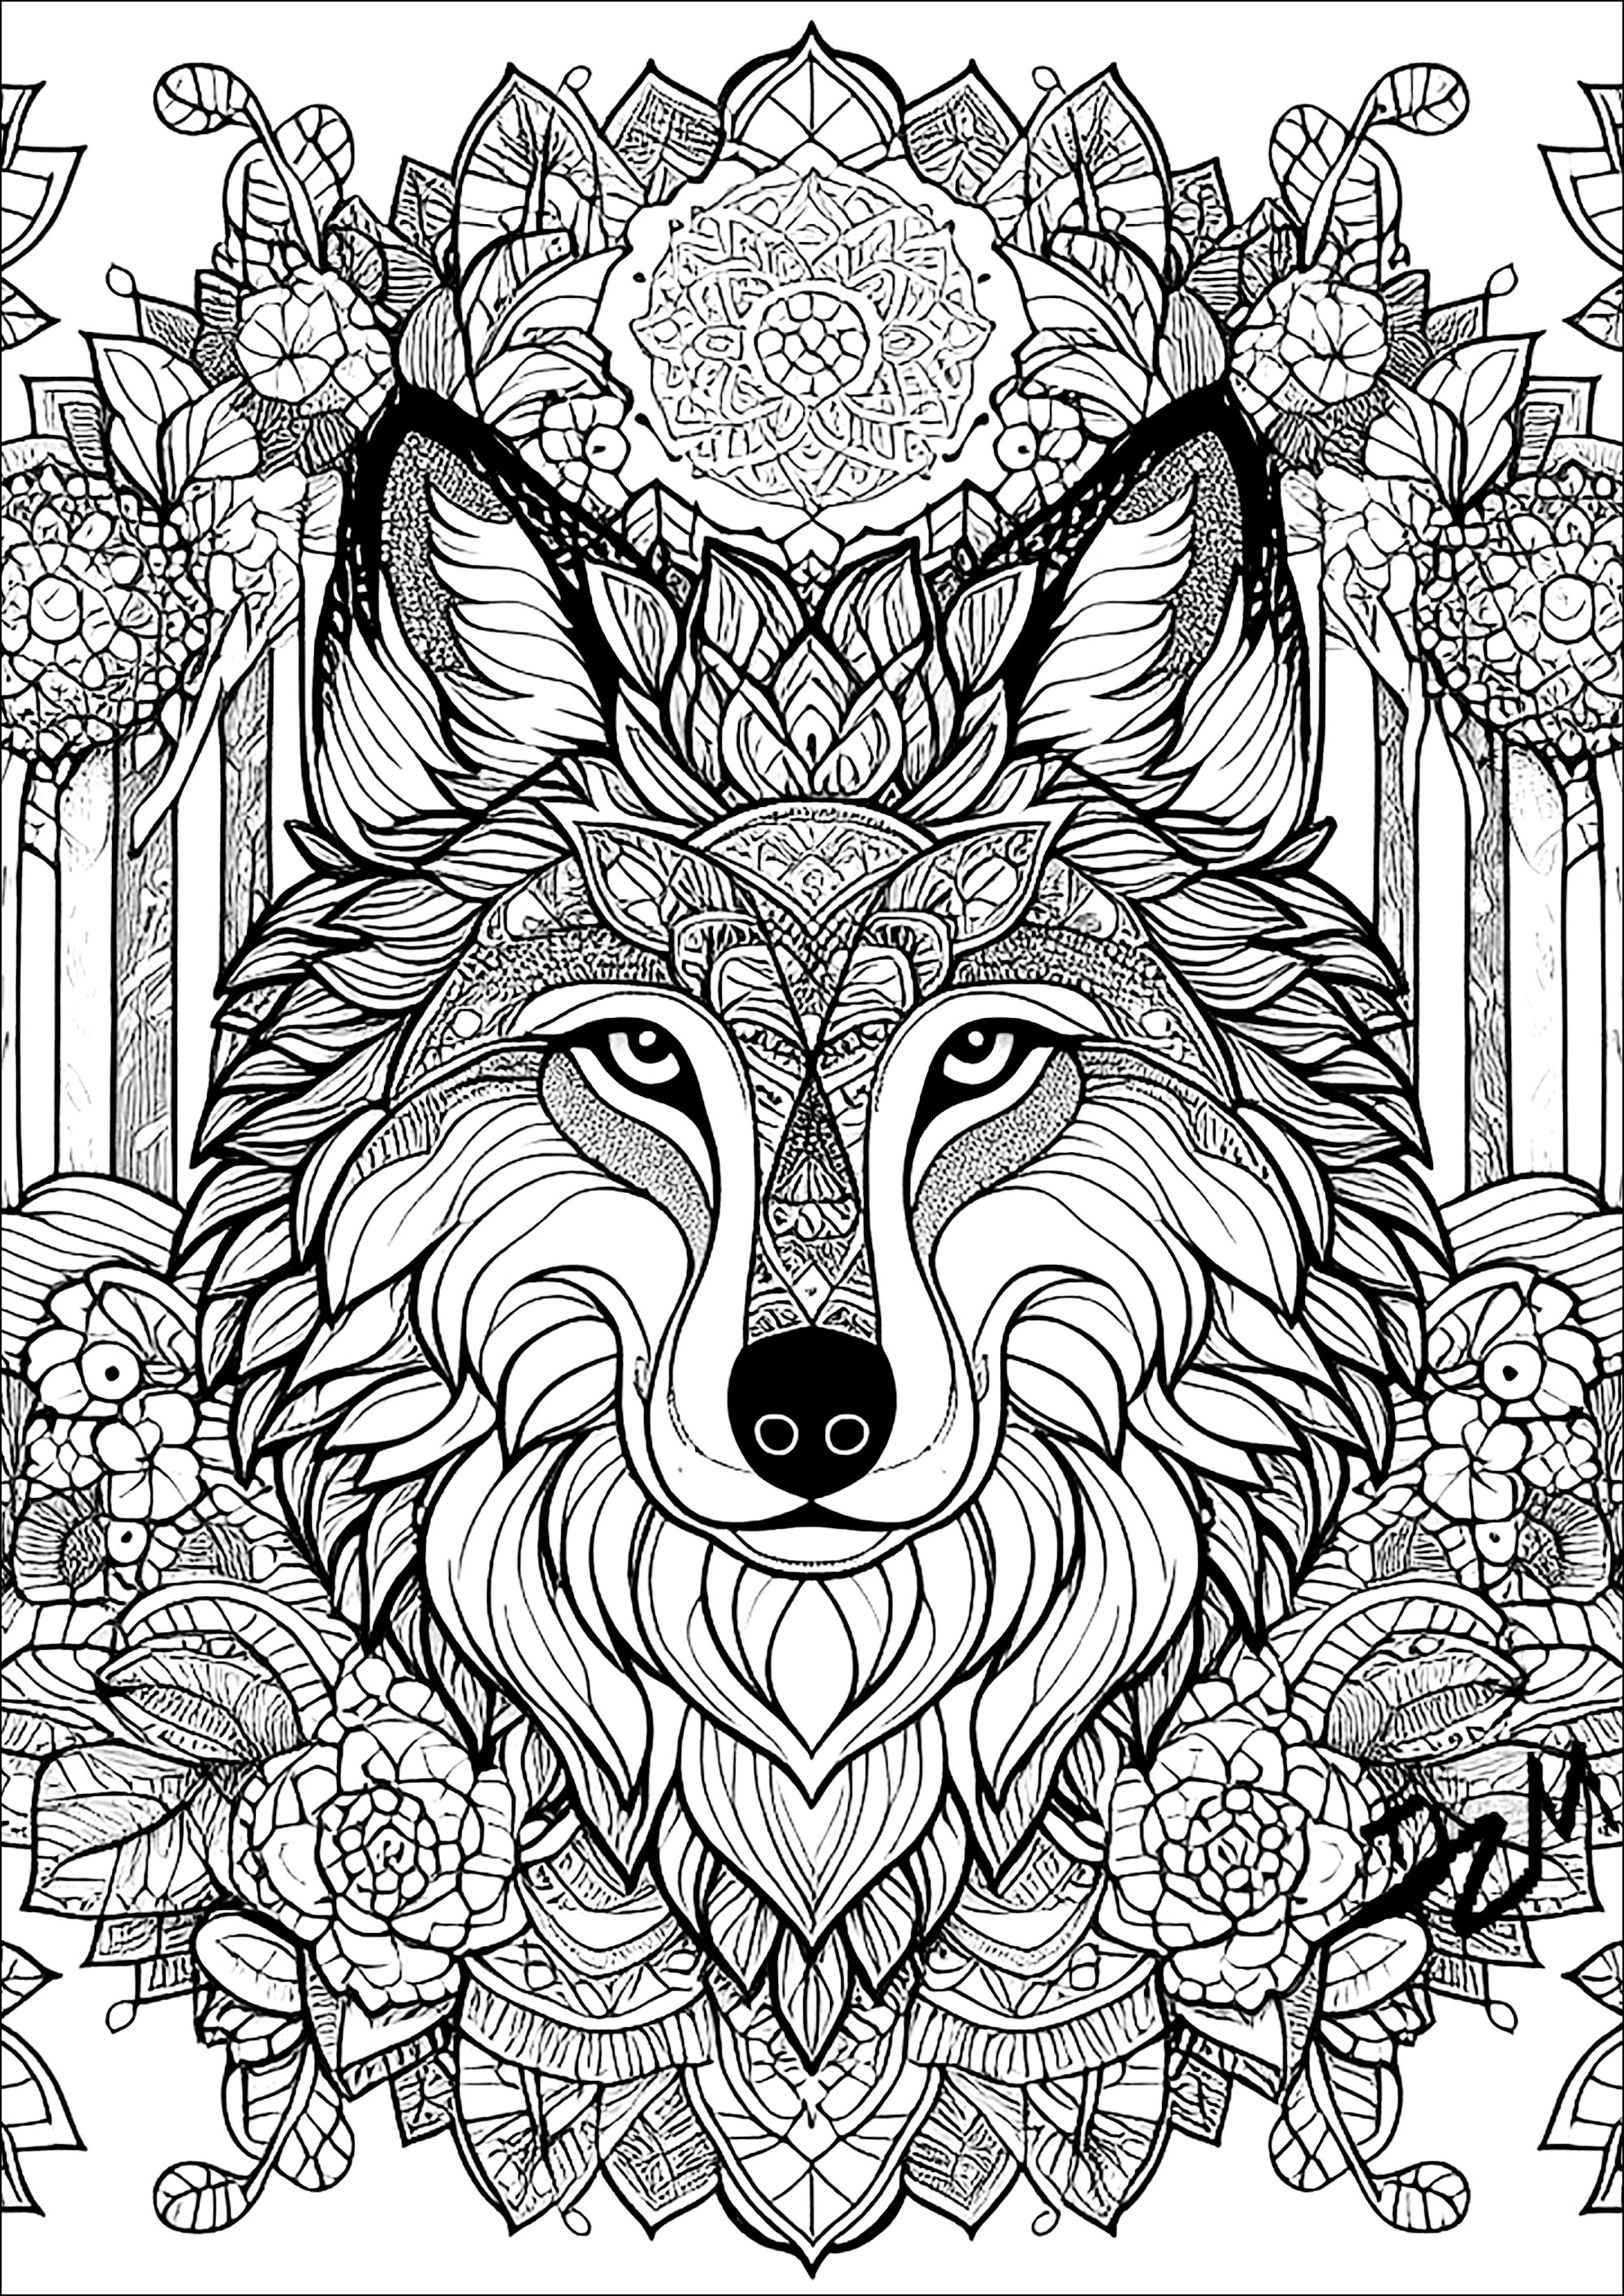 Wolf und Mandalas, Künstler : Domandalas